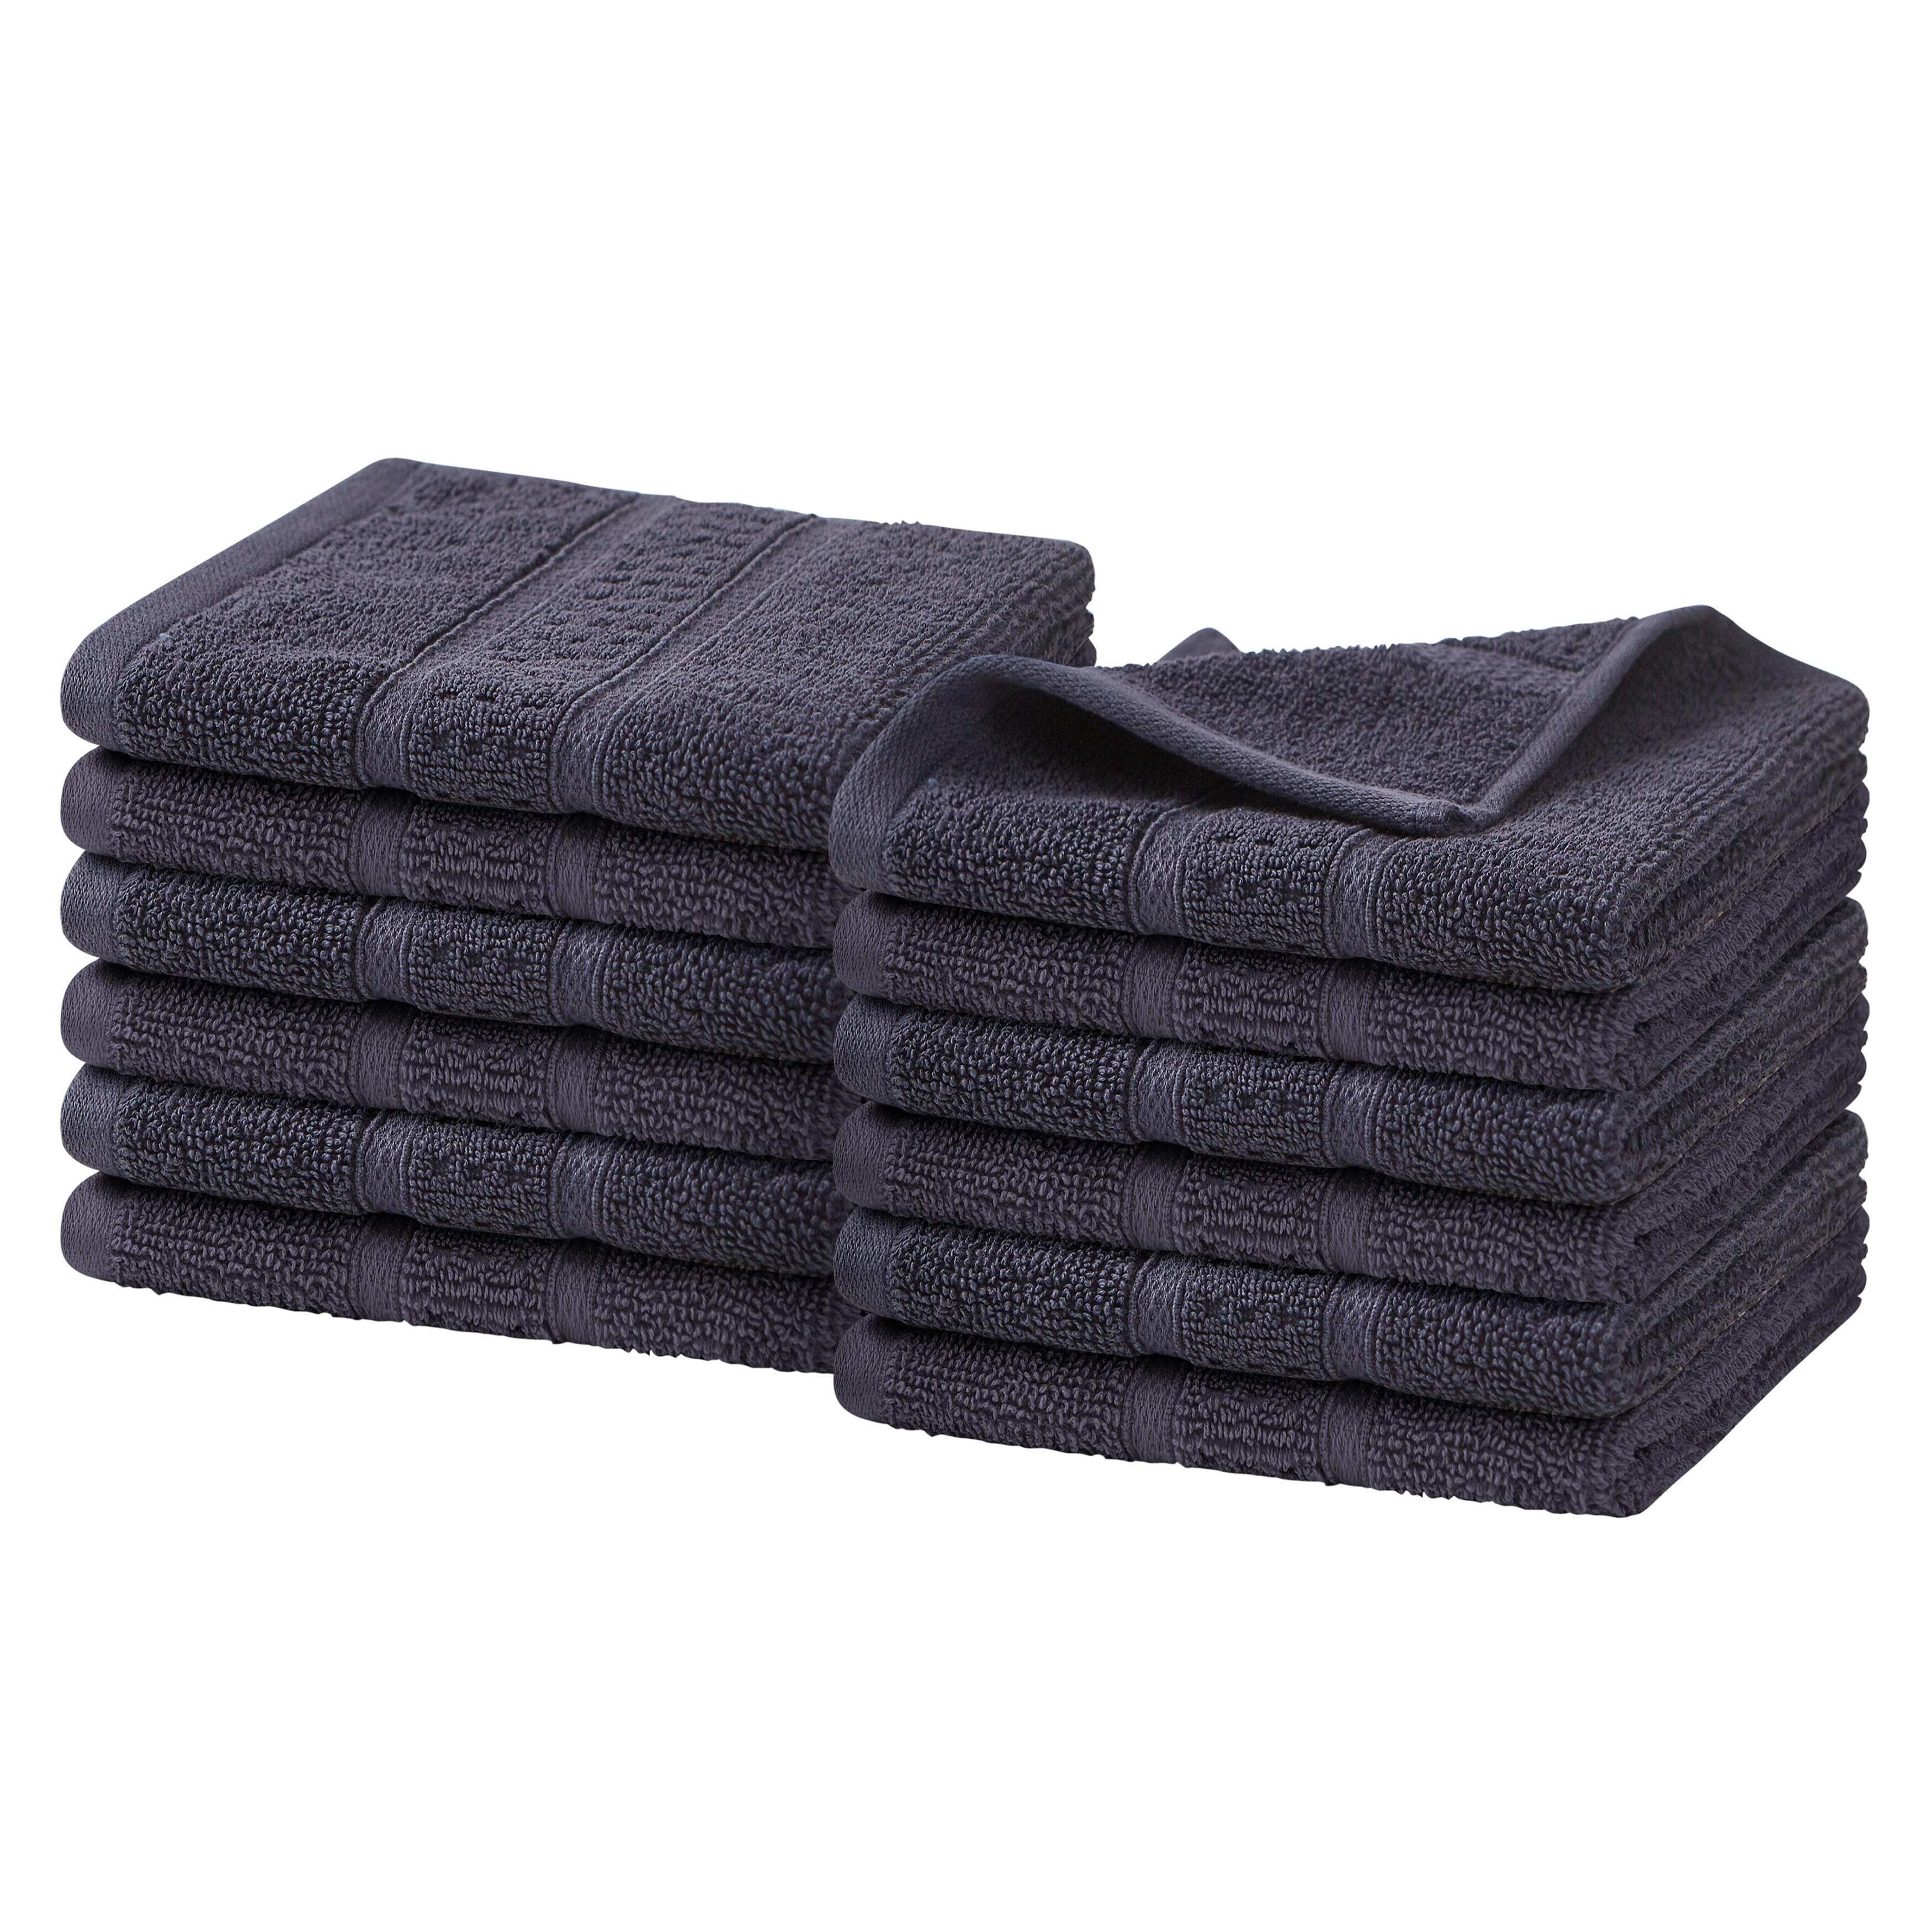 Nautica Oceane Solid Wellness Towel Collection - 2 Piece Bath Towel - Navy